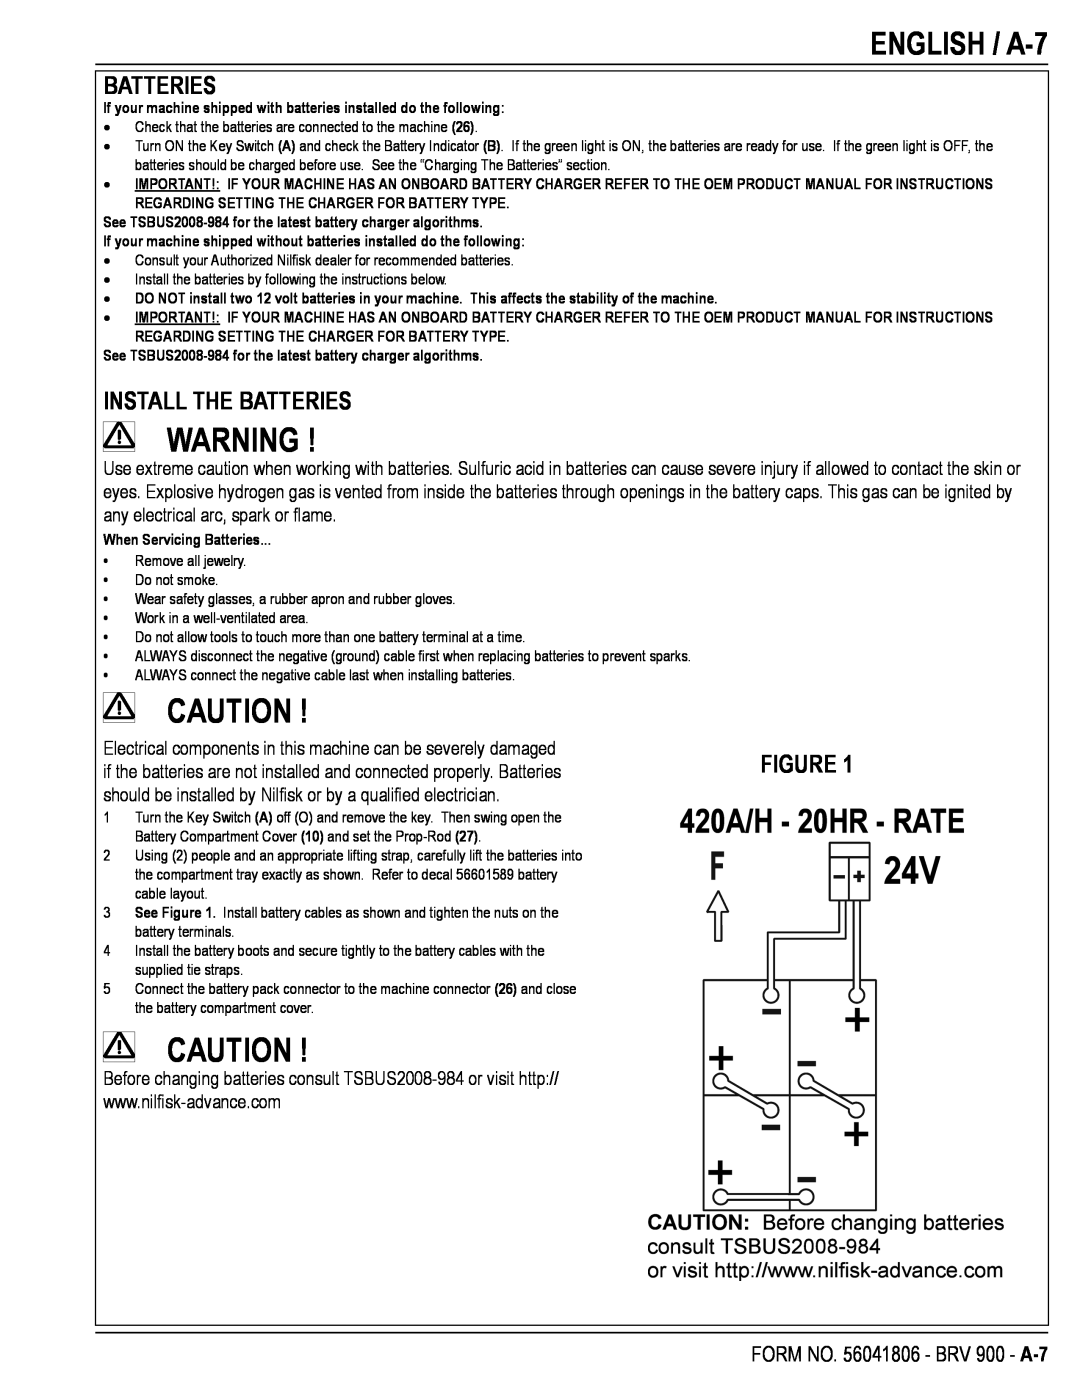 Nilfisk-Advance America manual ENGLISH / A-7, Install The Batteries, FORM NO. 56041806 - BRV 900 - A-7 